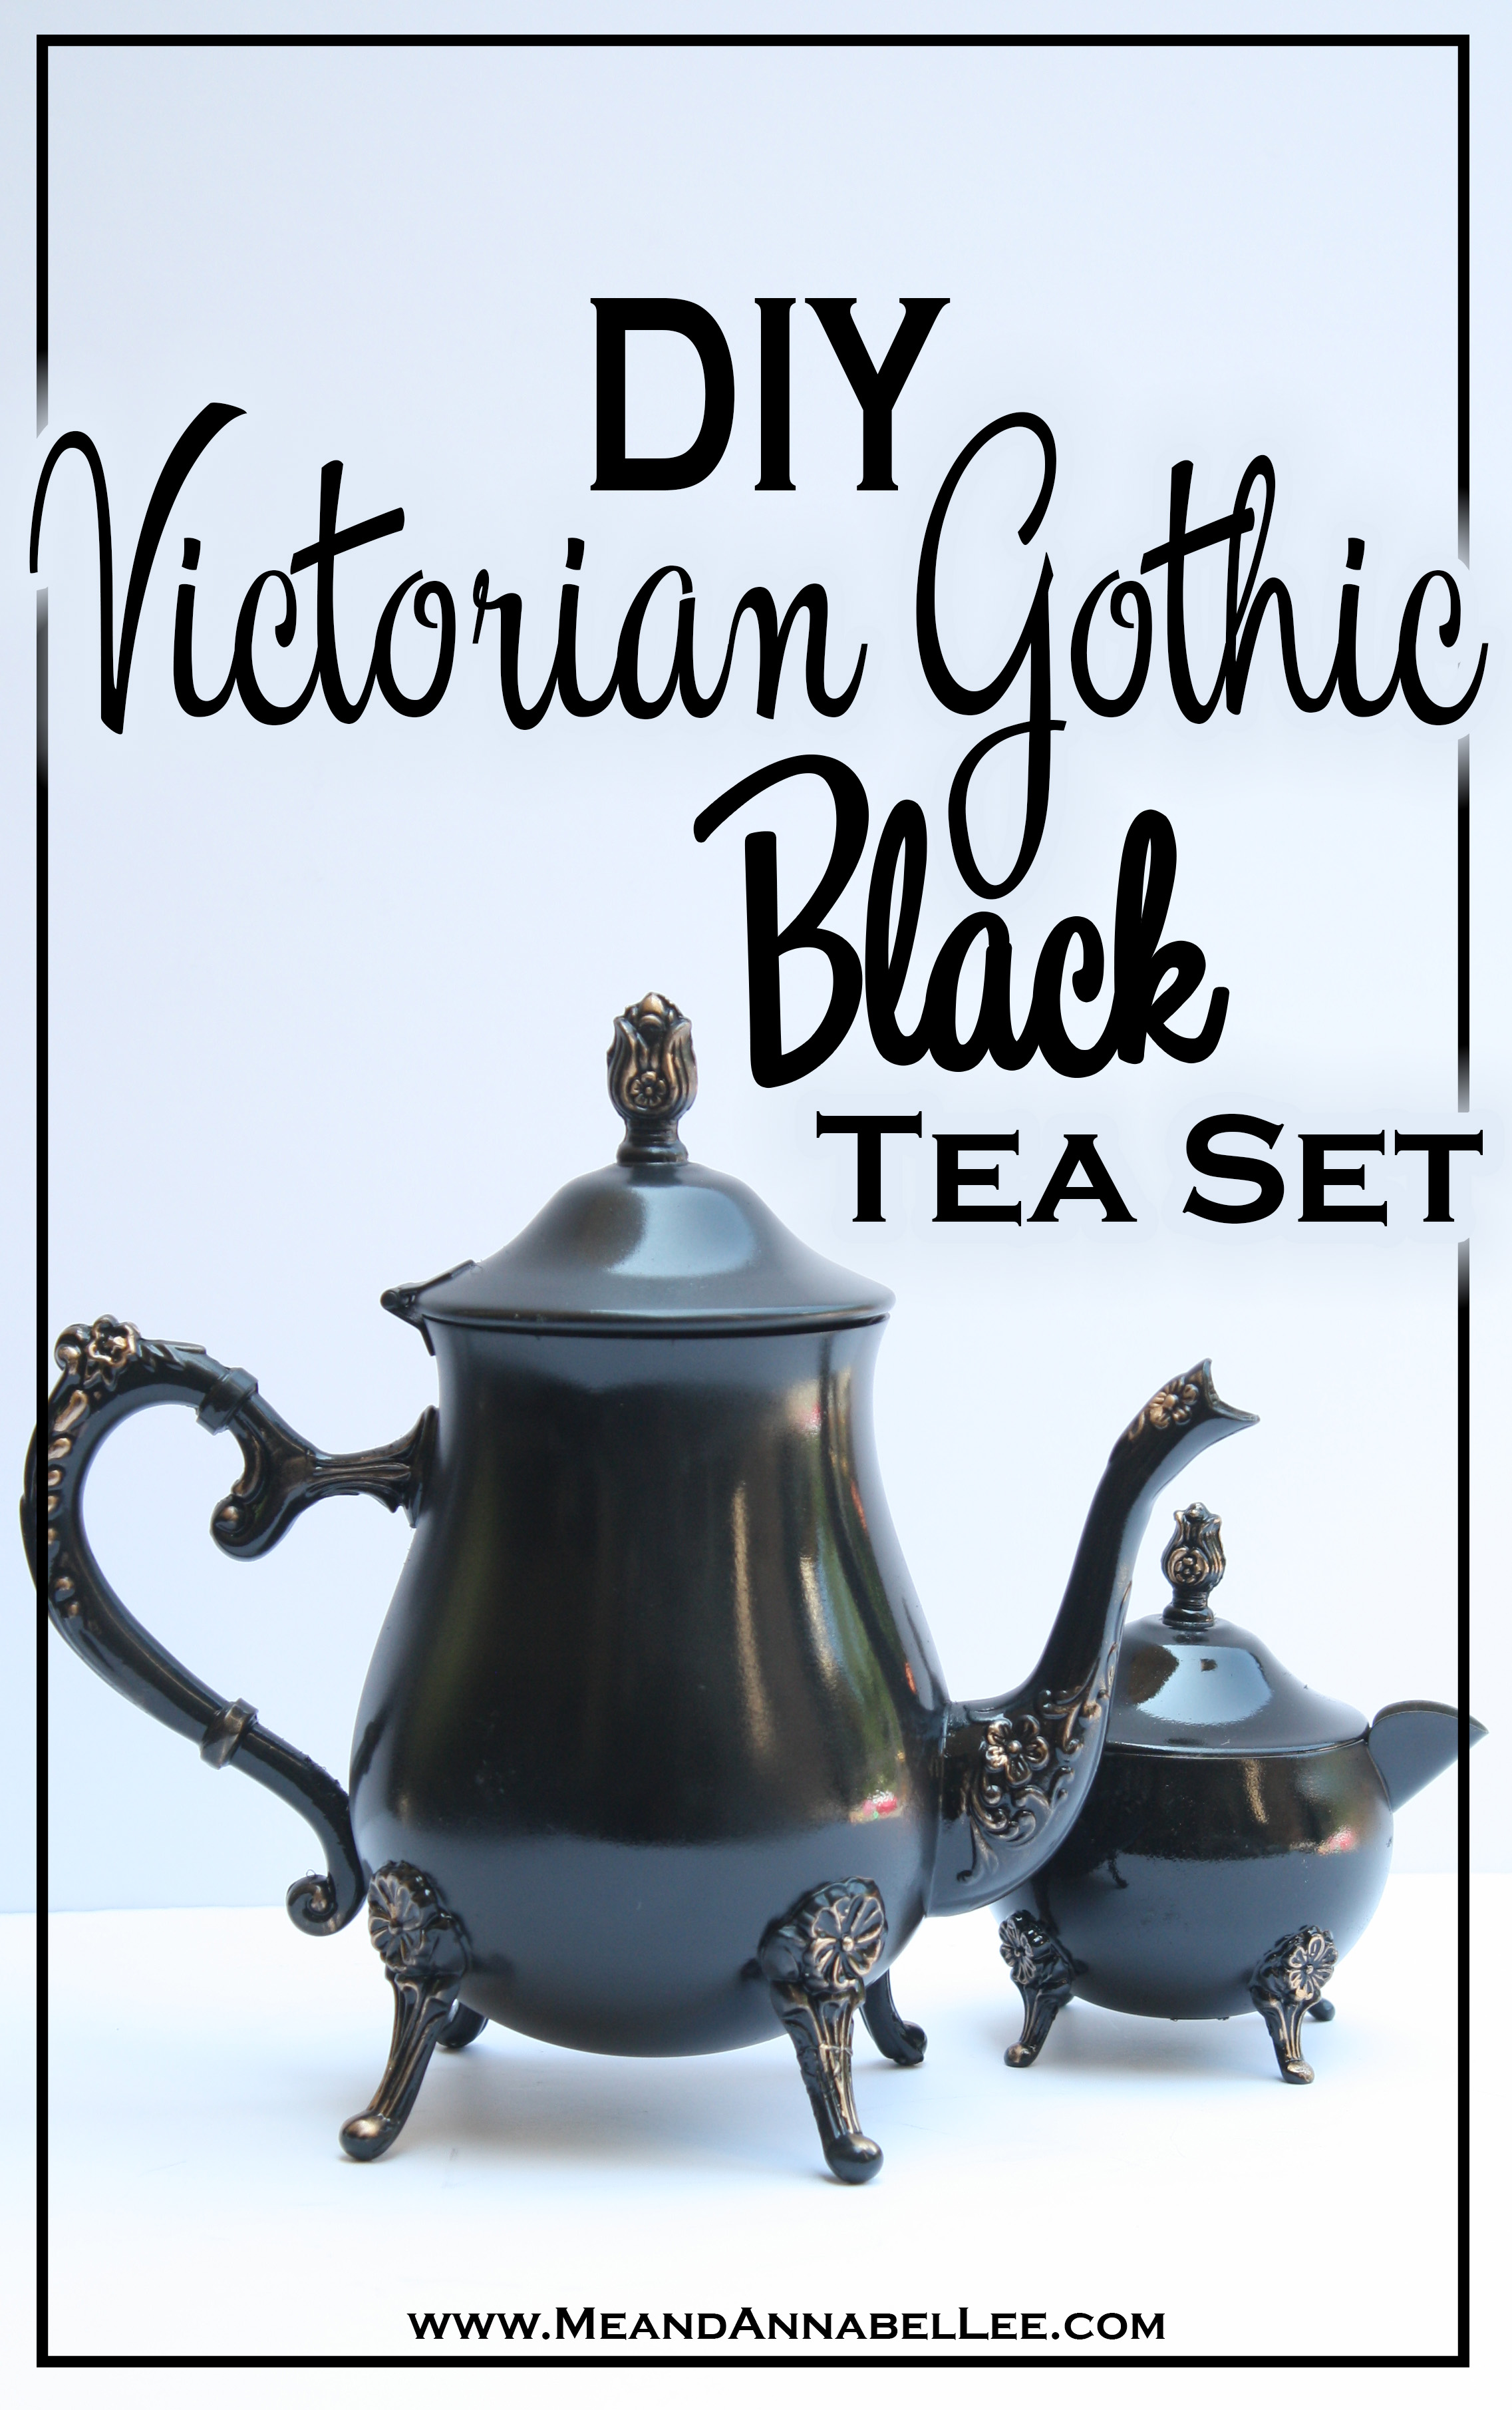 DIY Black & Gold Victorian Gothic Tea Set - Goth entertaining & Home Decor - www.MeandAnnabelLee.com - Blog for all things Dark, Gothic, Victorian, & Unusual